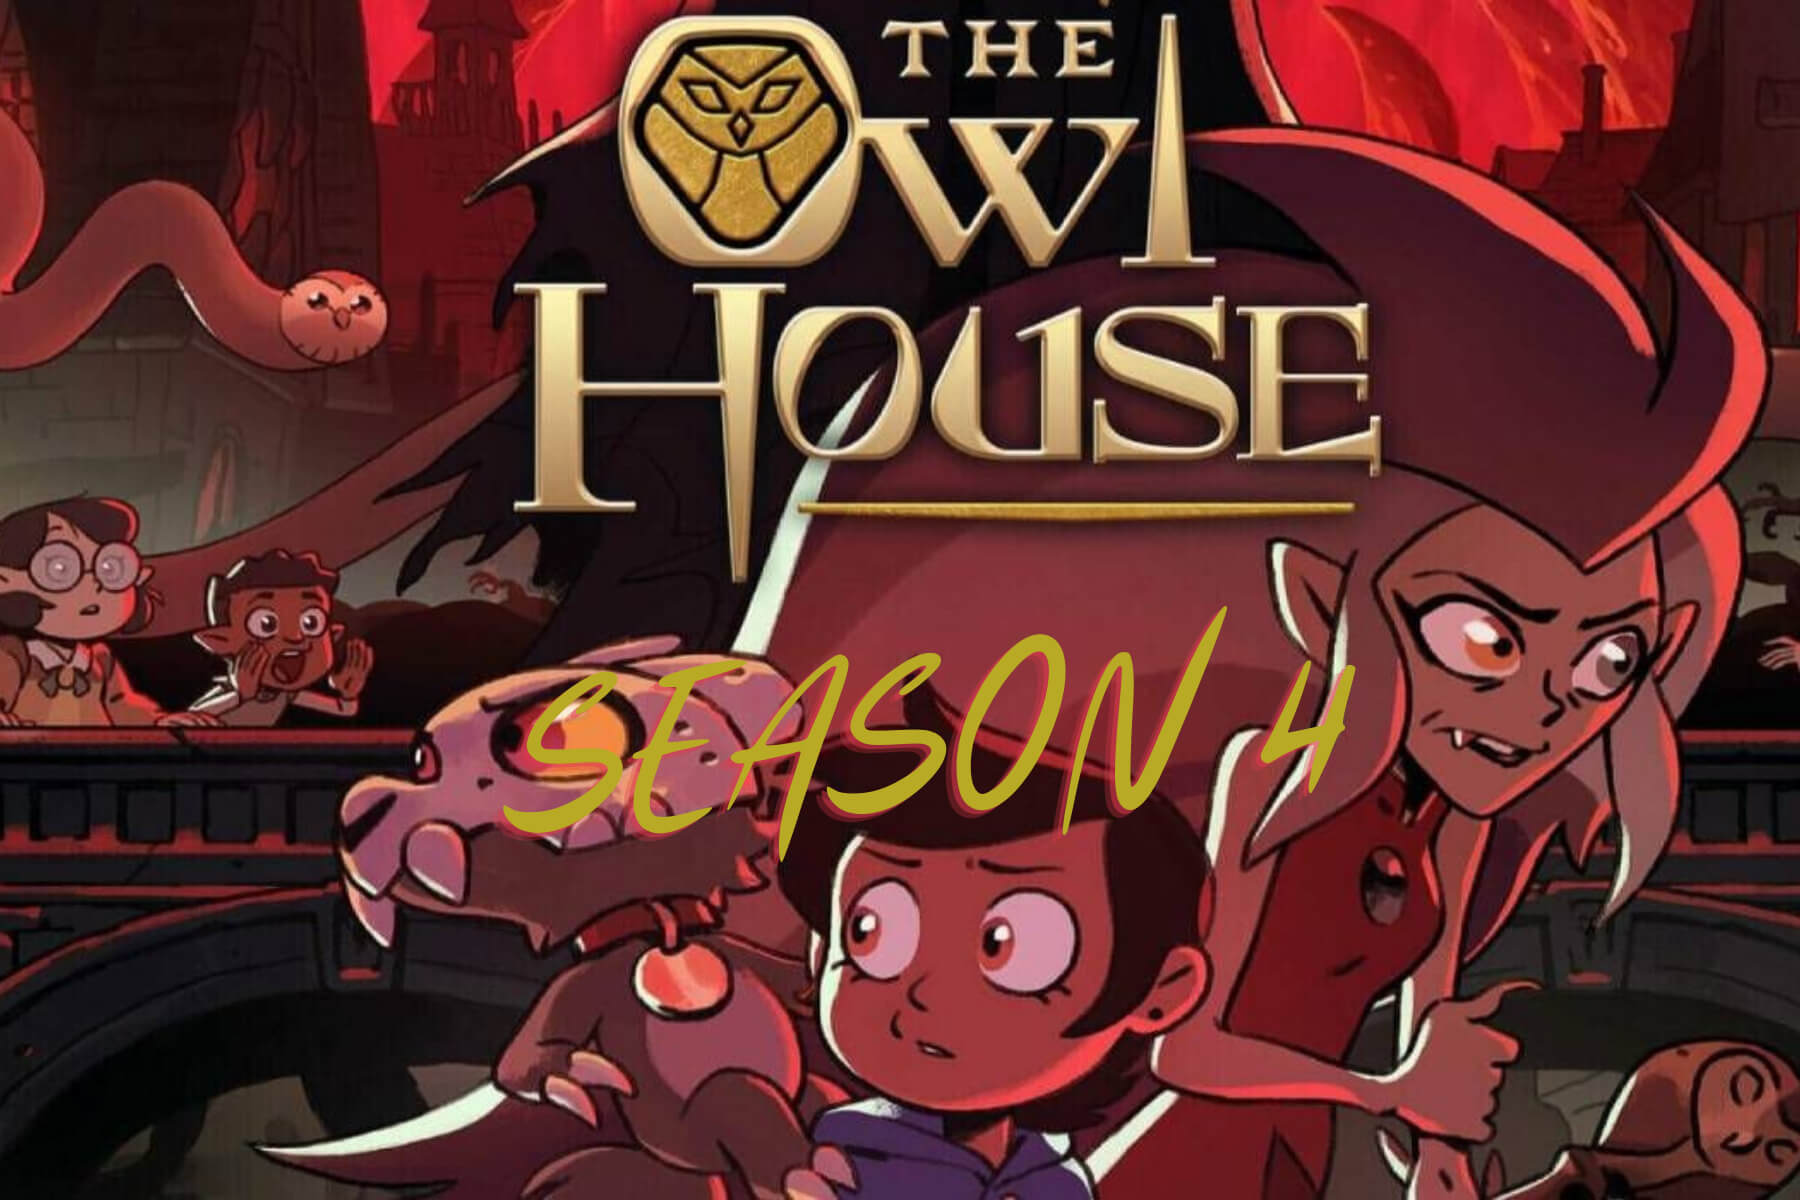 Disney+ Series The Owl House Season 3 Premiere Is on